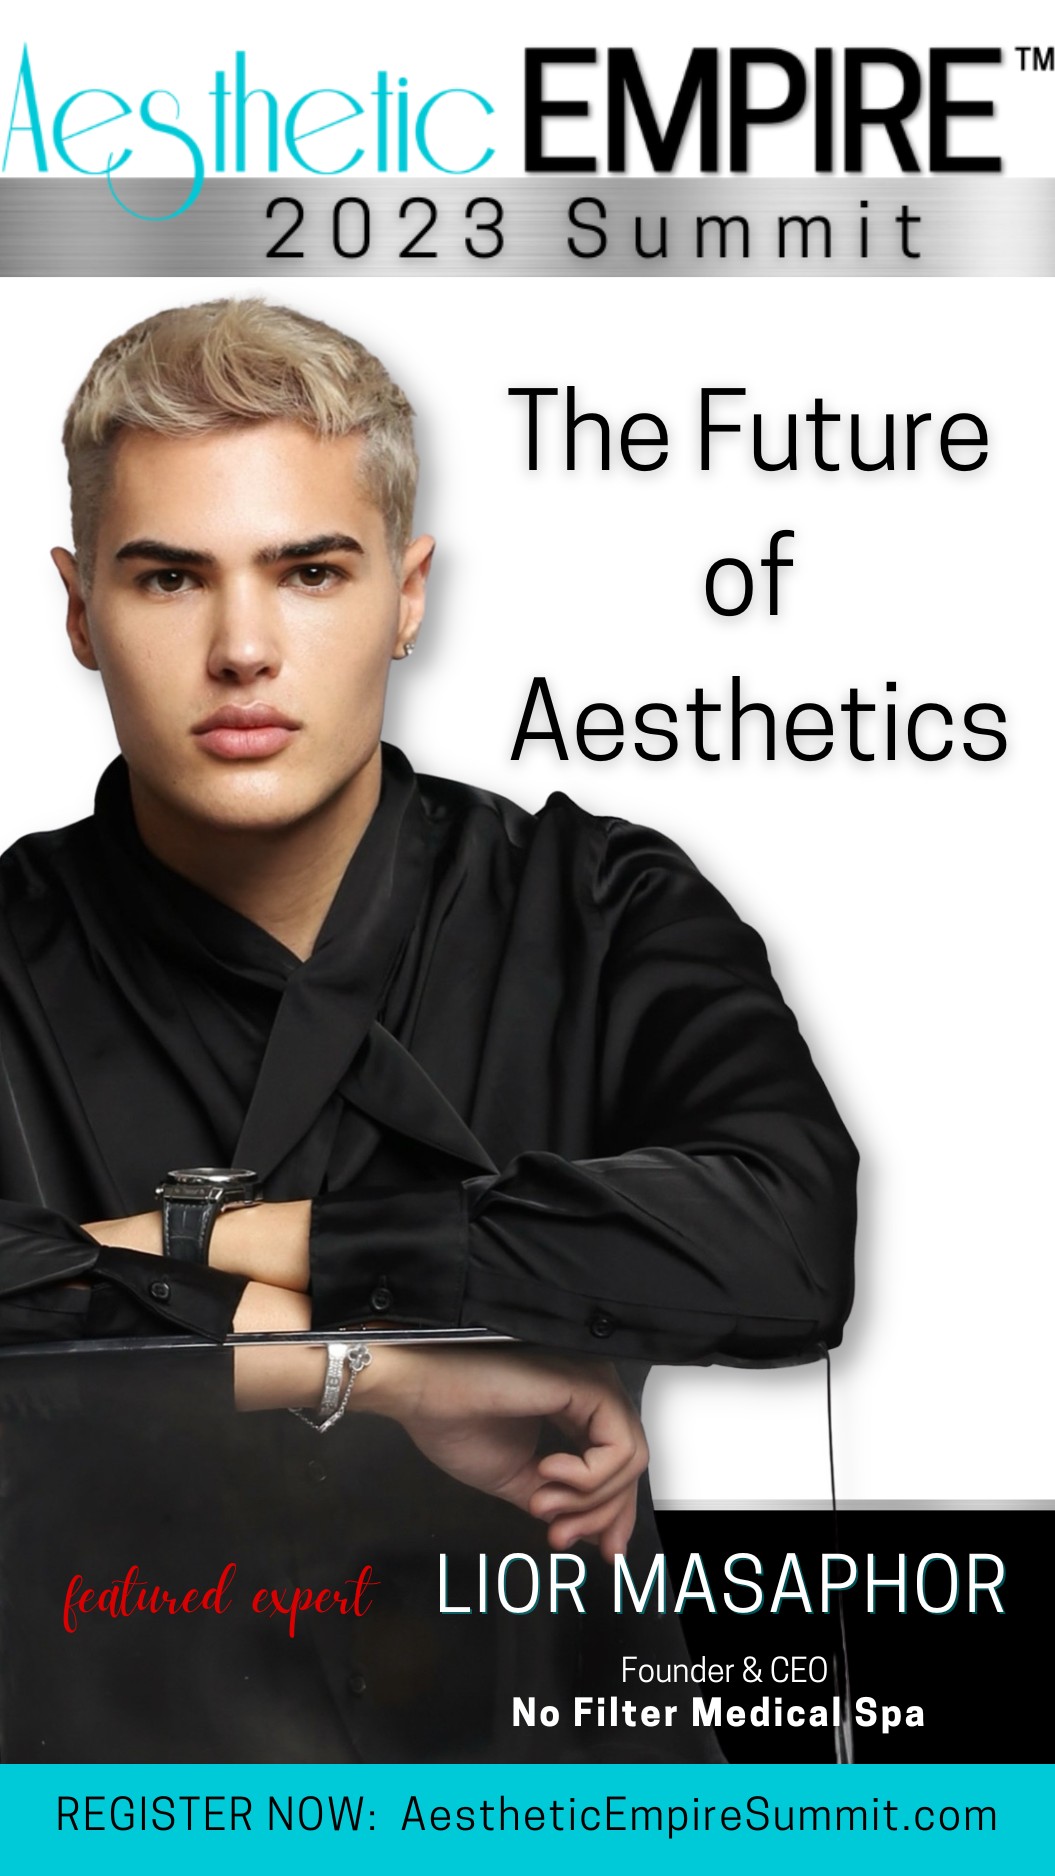 Lior Masaphor on the The Future of Aesthetics